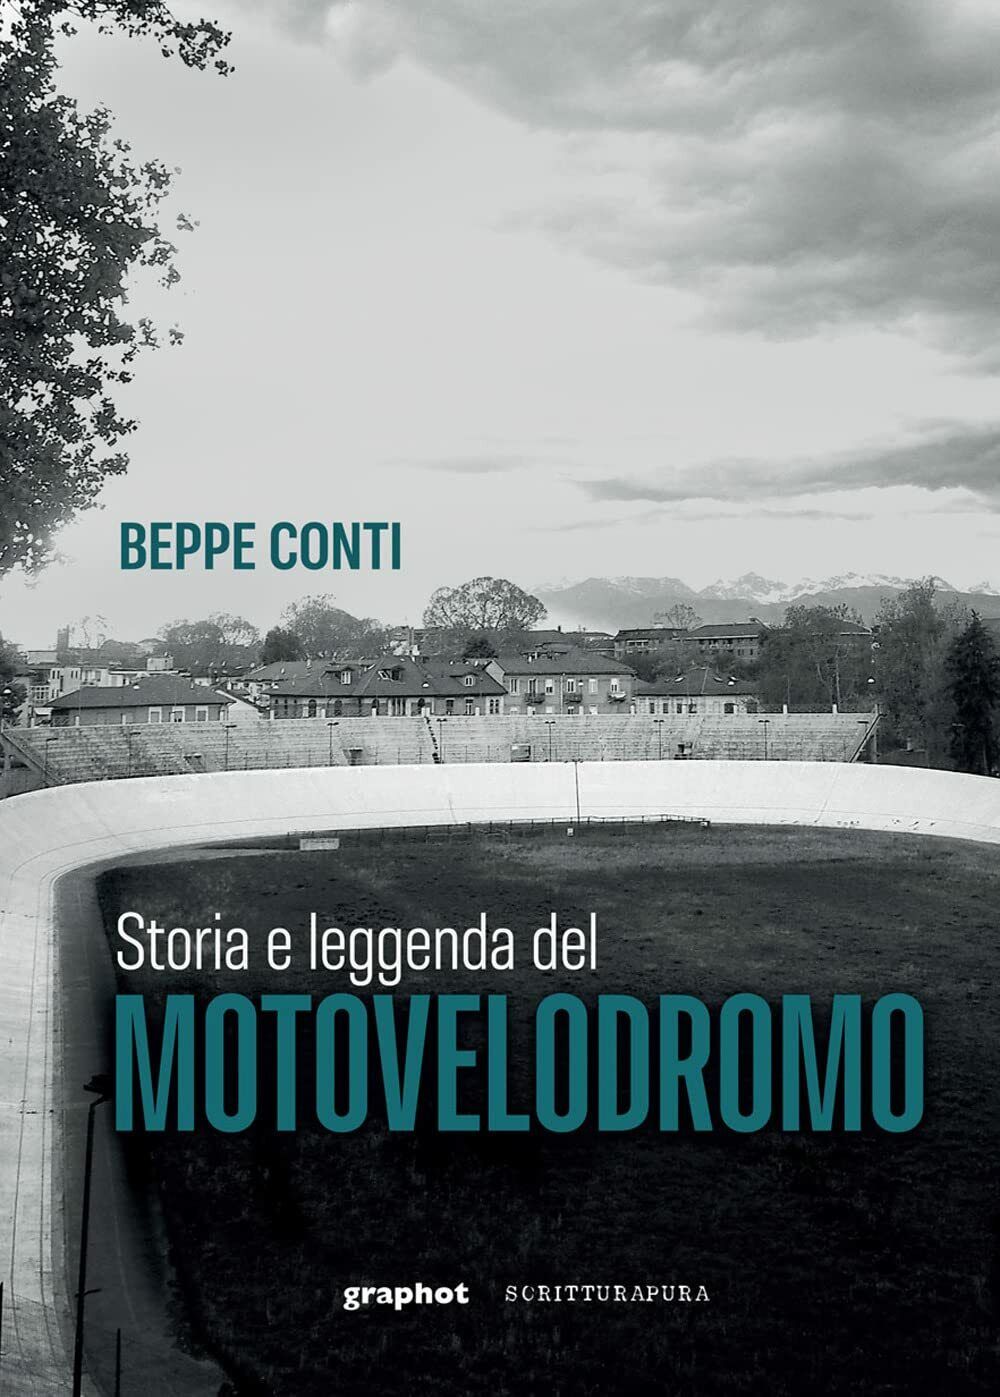 Storia e leggenda del motovelodromo - Beppe Conti - Scritturapura, 2022